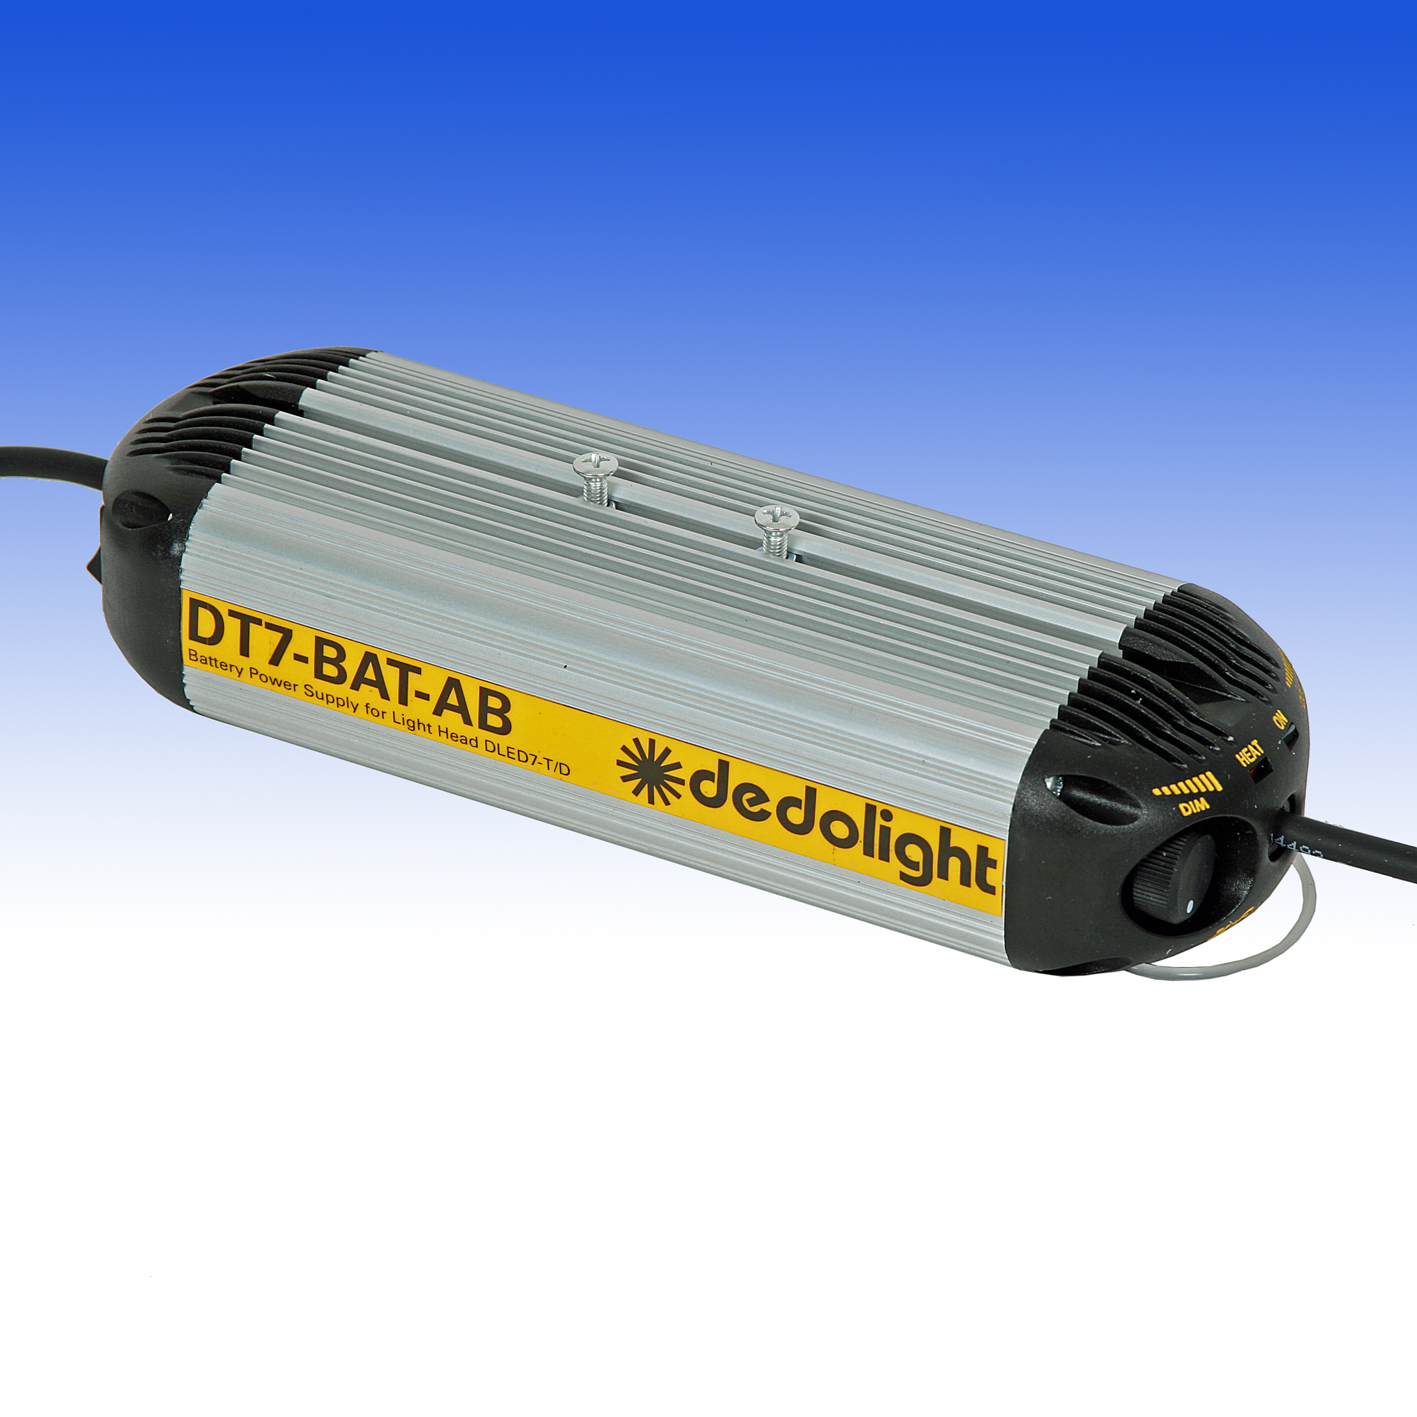 DT7-BAT-AB Batterie-Vorschaltgerät zur DLED7-D